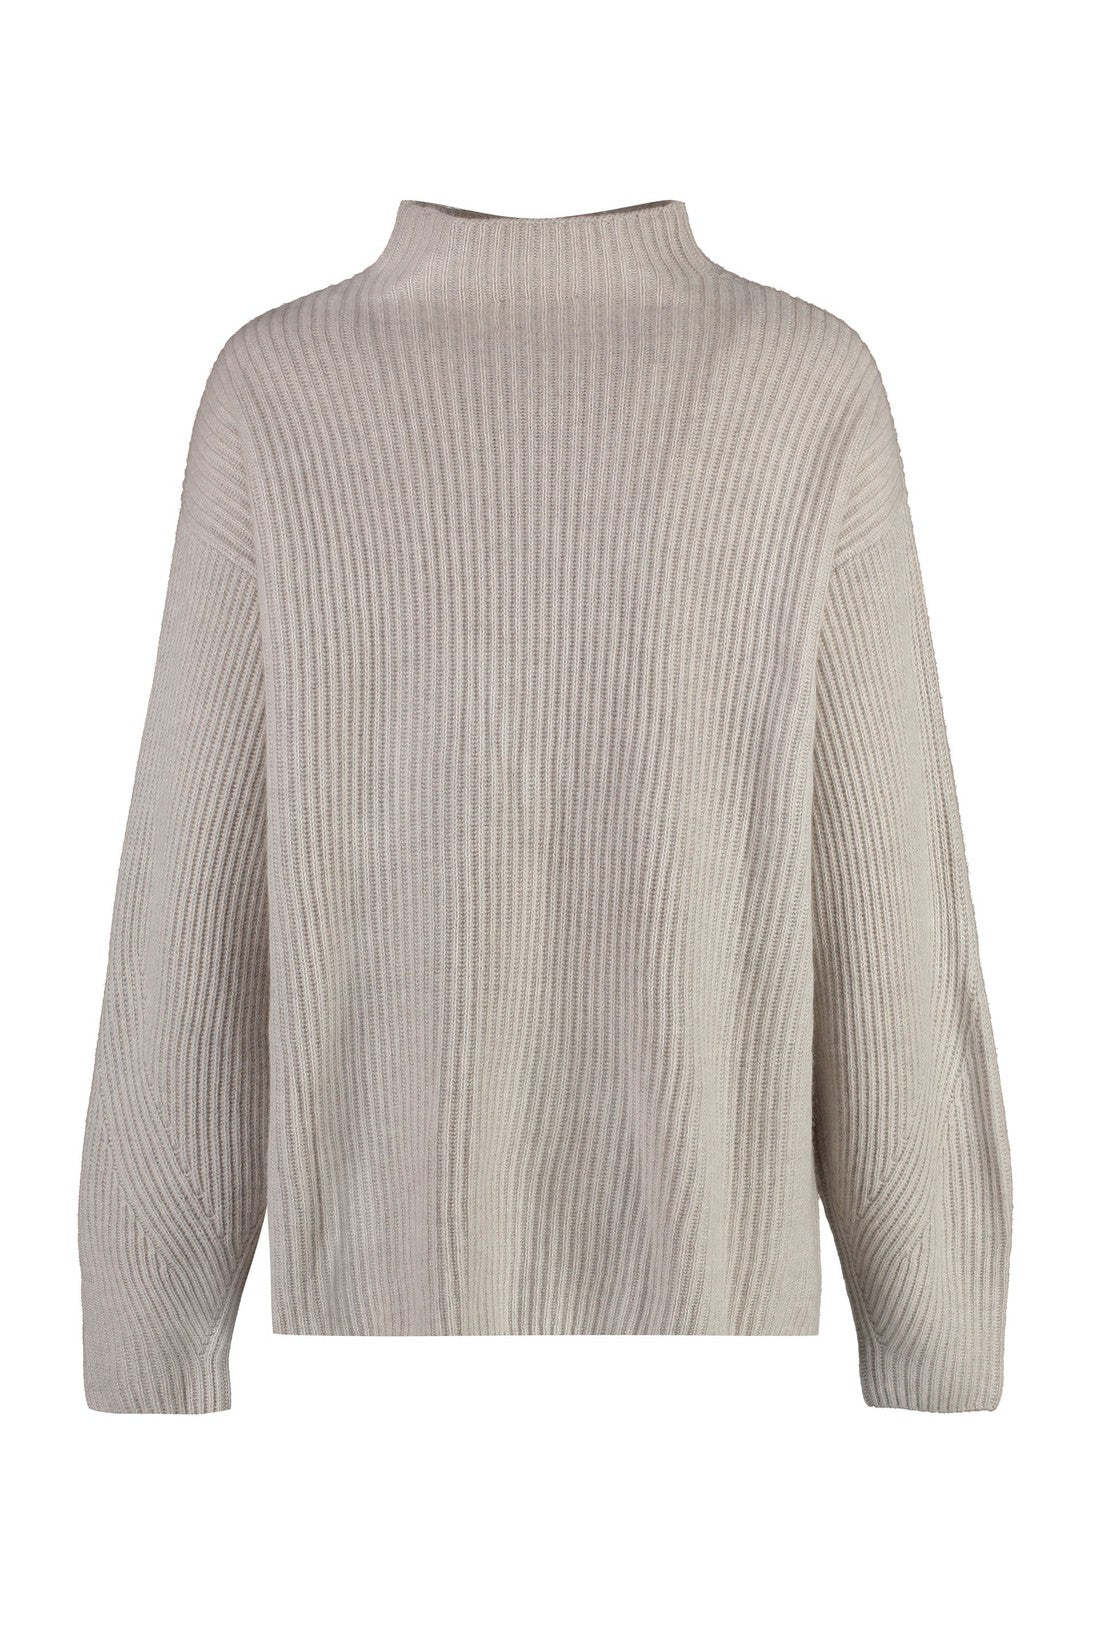 Le Kasha-OUTLET-SALE-Cashmere turtleneck pullover-ARCHIVIST